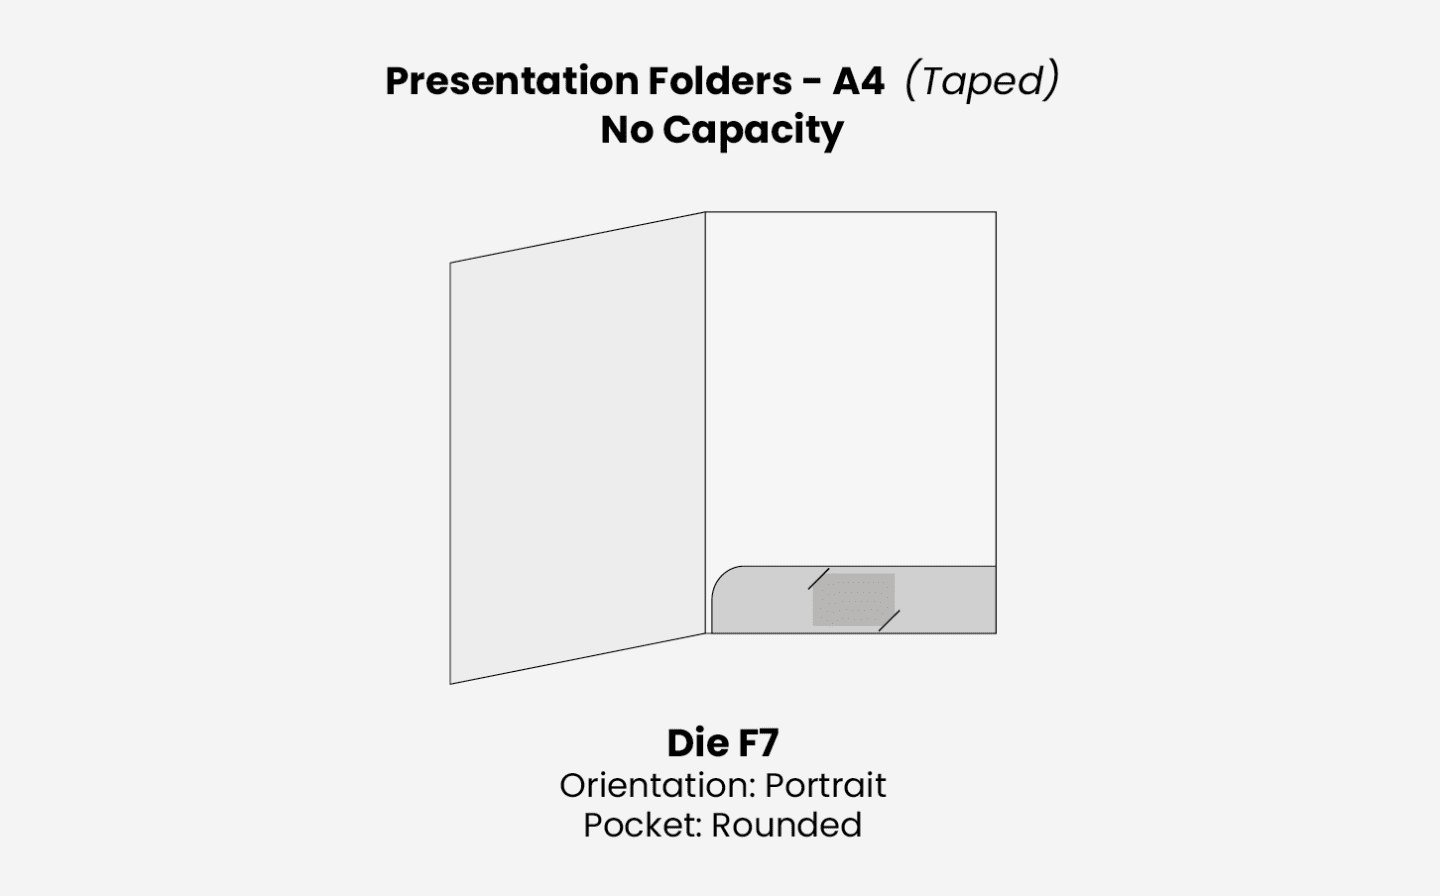 A4 Presentation Folder - Taped - 0mm Capacity